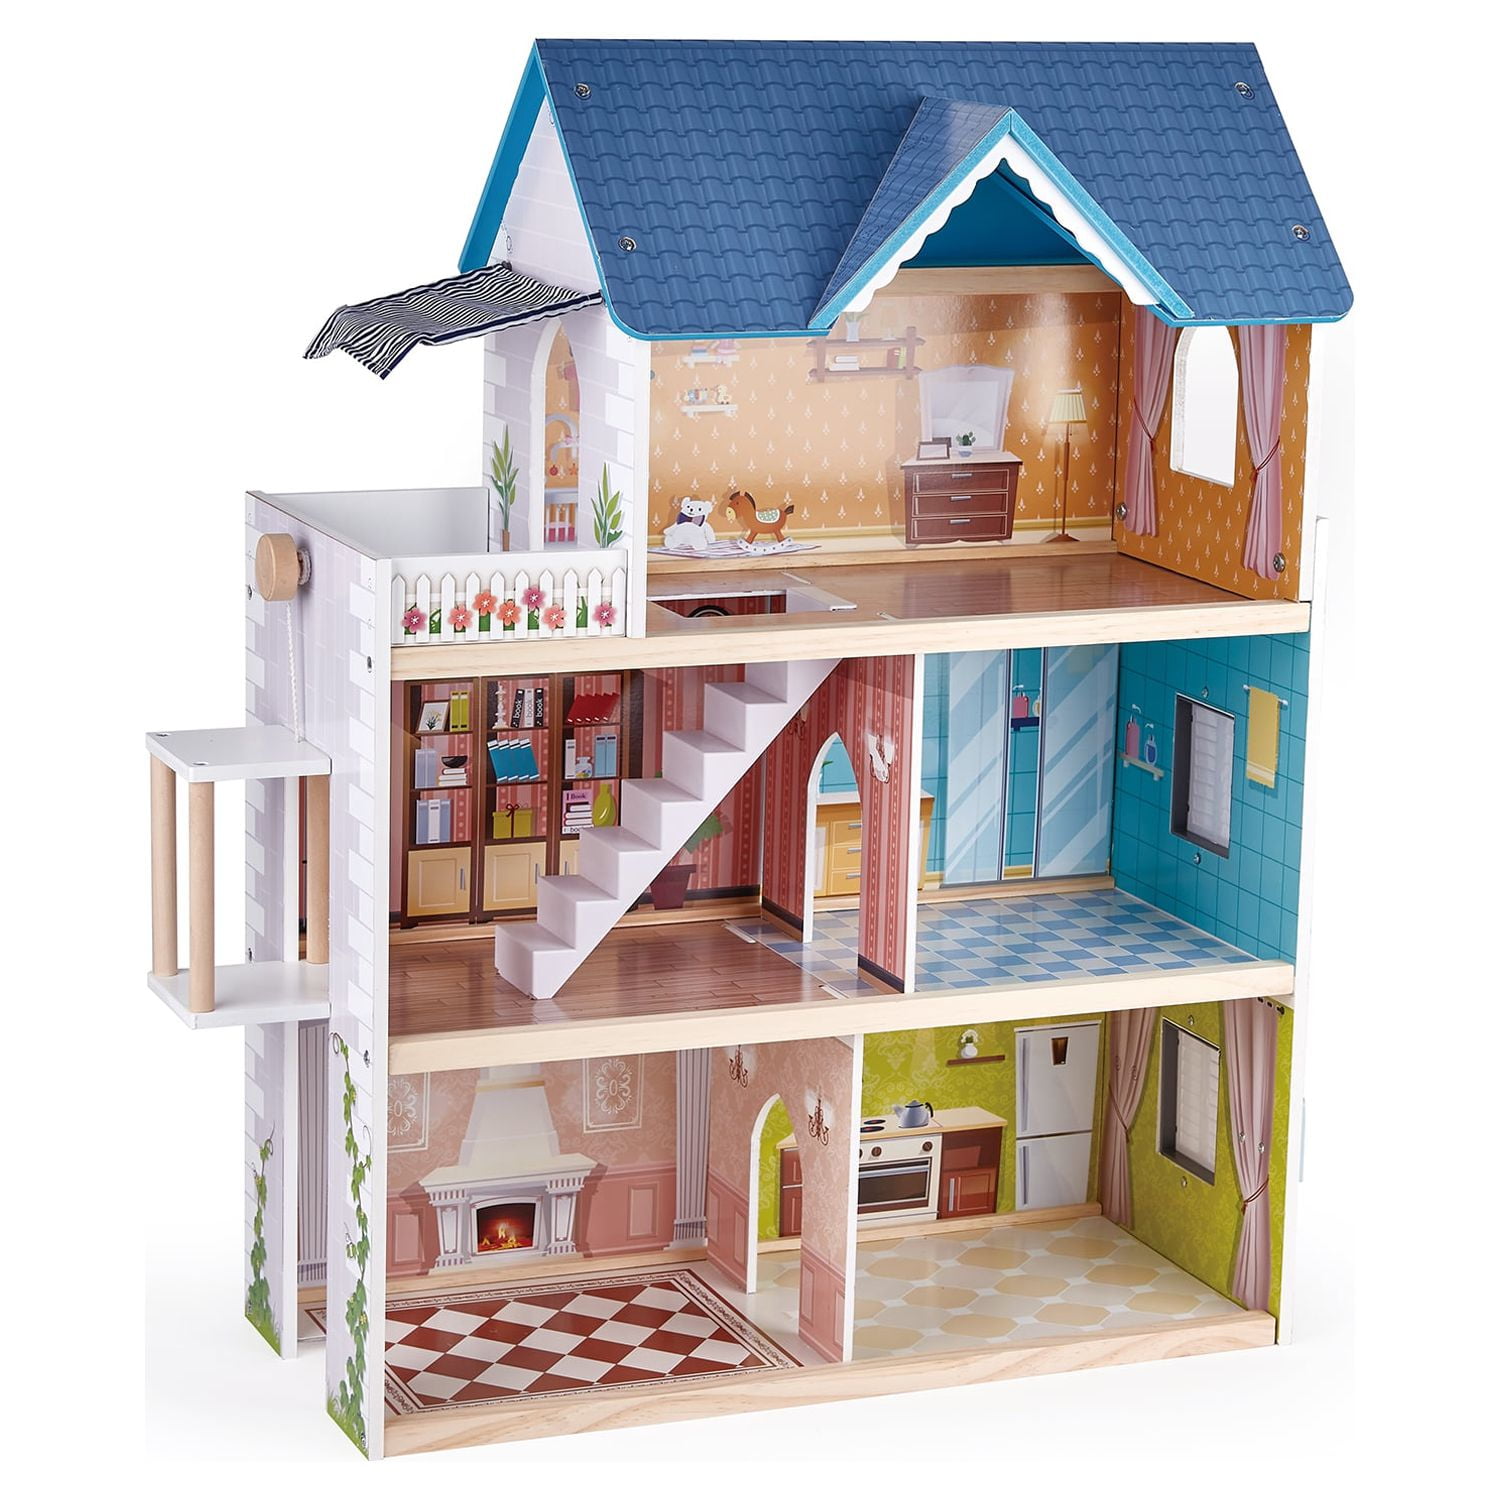 1:6 doll house mini model furniture accessories Eight-piece